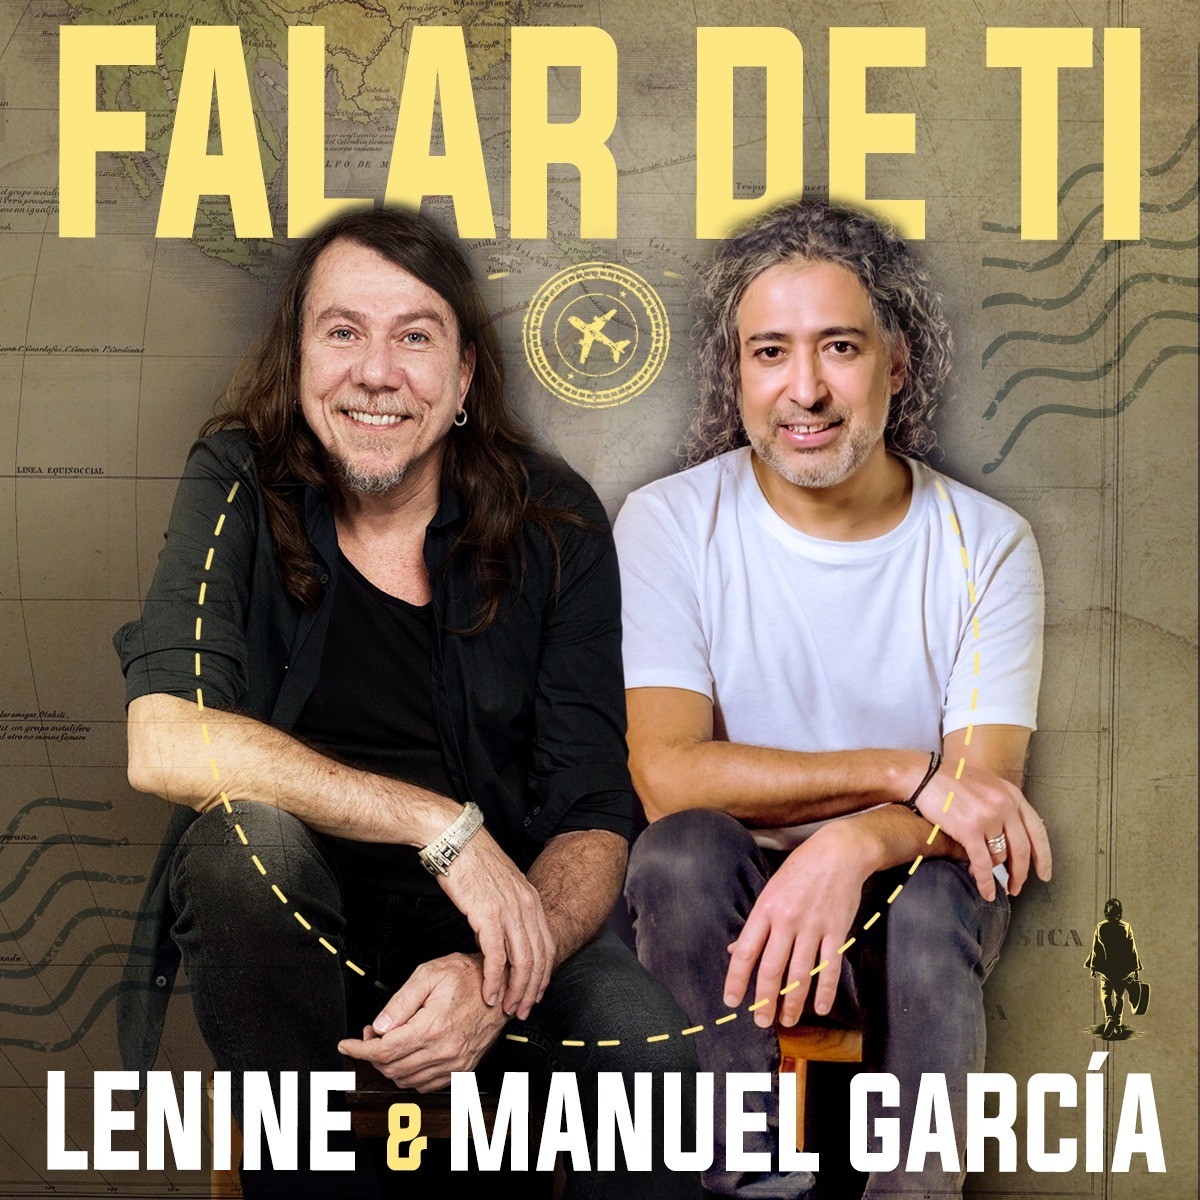 Lenine segue a trilha chilena de Manuel García no single ‘Falar de ti’ | Blog do Mauro Ferreira